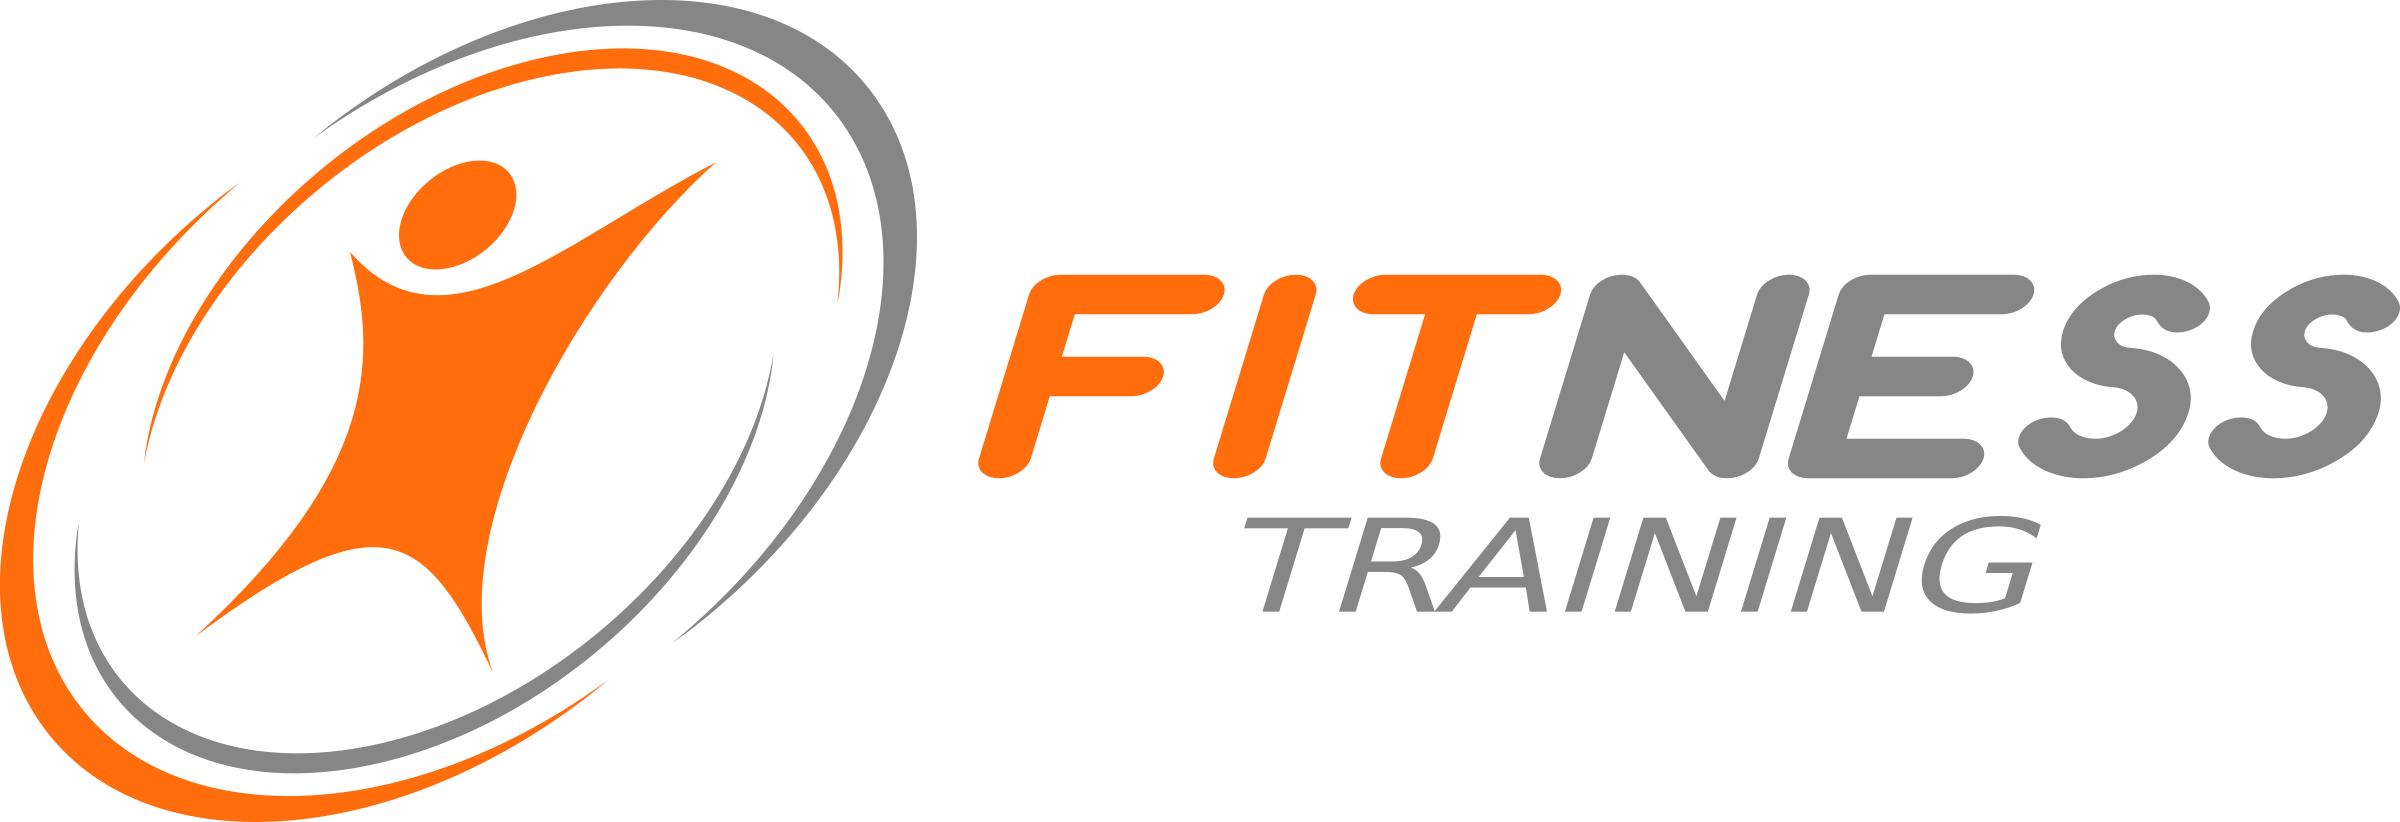 fitness logo icons